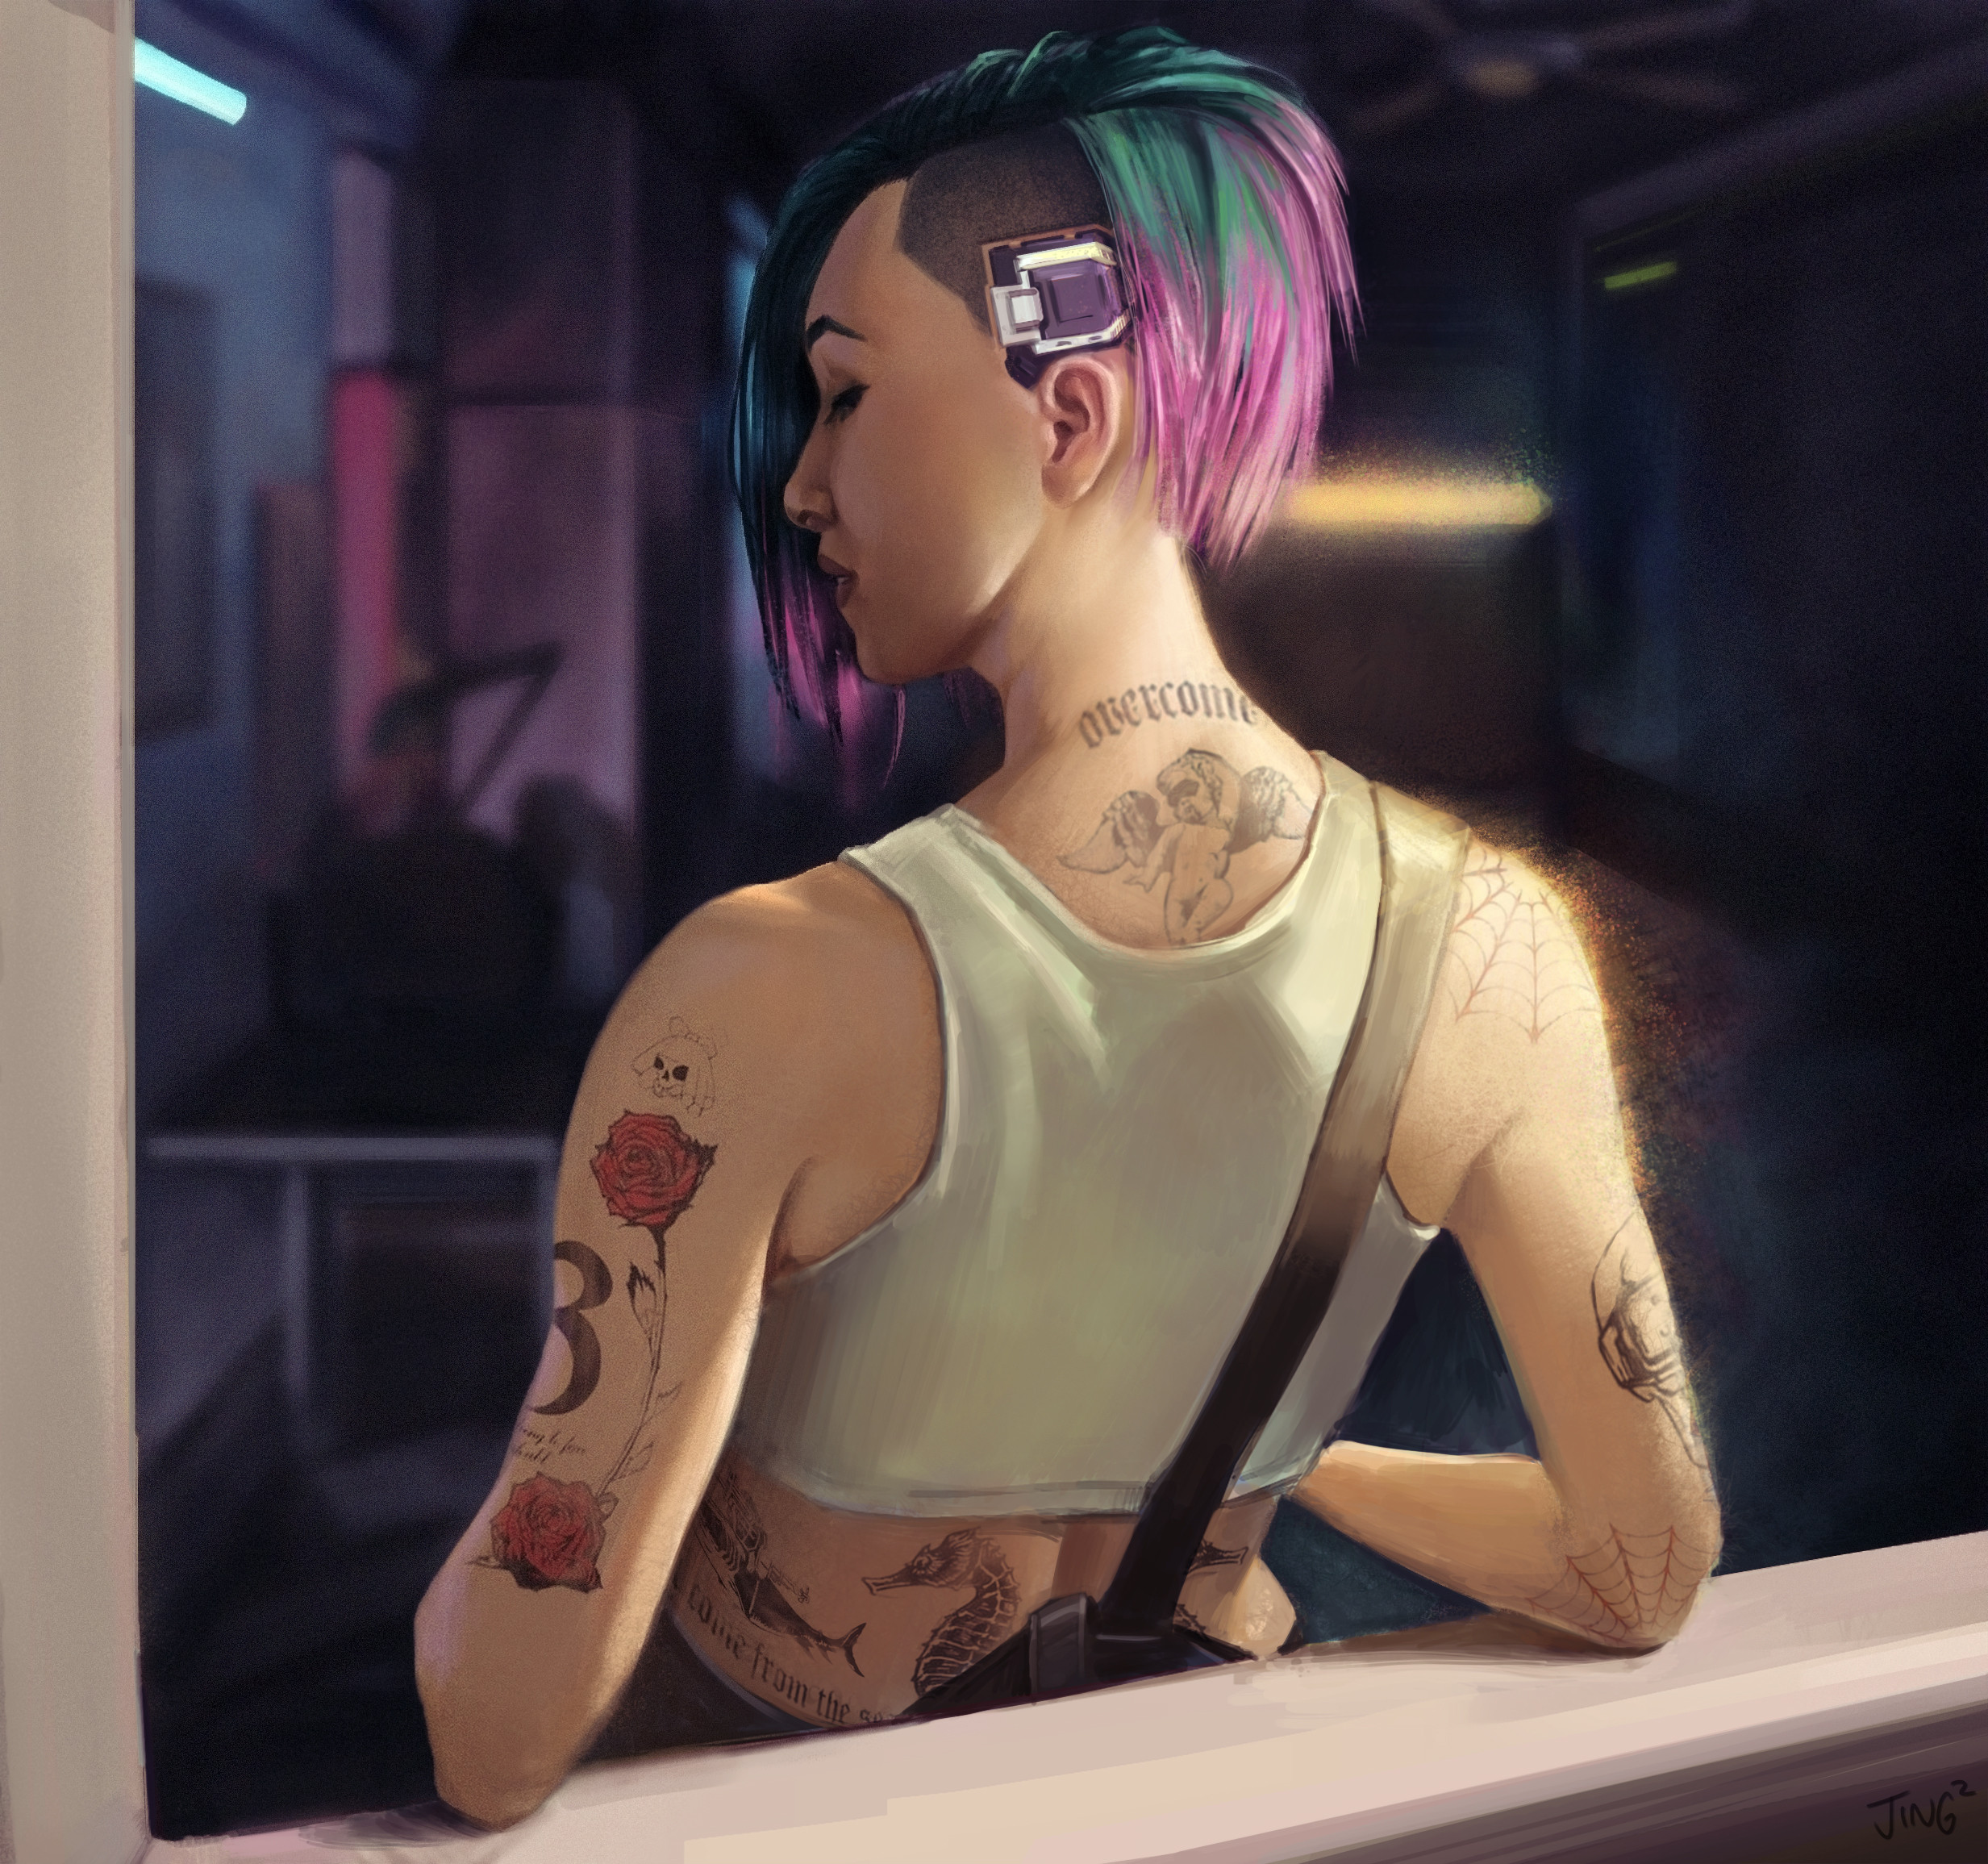 Drawing Tattoo Digital Art Fan Art Back Undercut Hairstyle Video Game Girls Game Art Dyed Hair Women 2465x2311